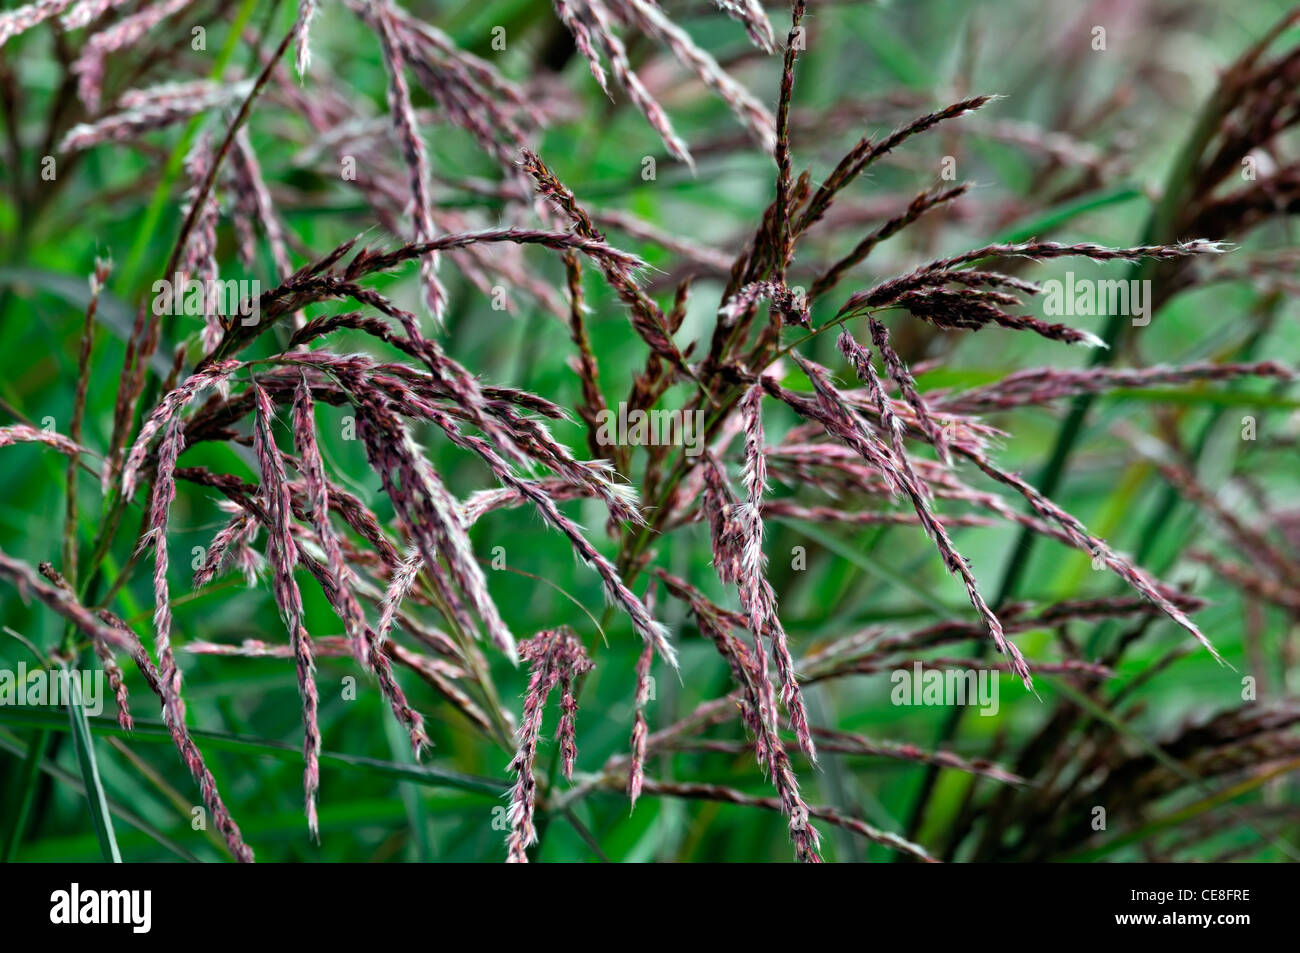 Miscanthus sinensis plantes ornementales portraits gros plan kaskade herbes herbe graines semences seedhead seedheads pendantes à feuilles caduques inf Banque D'Images